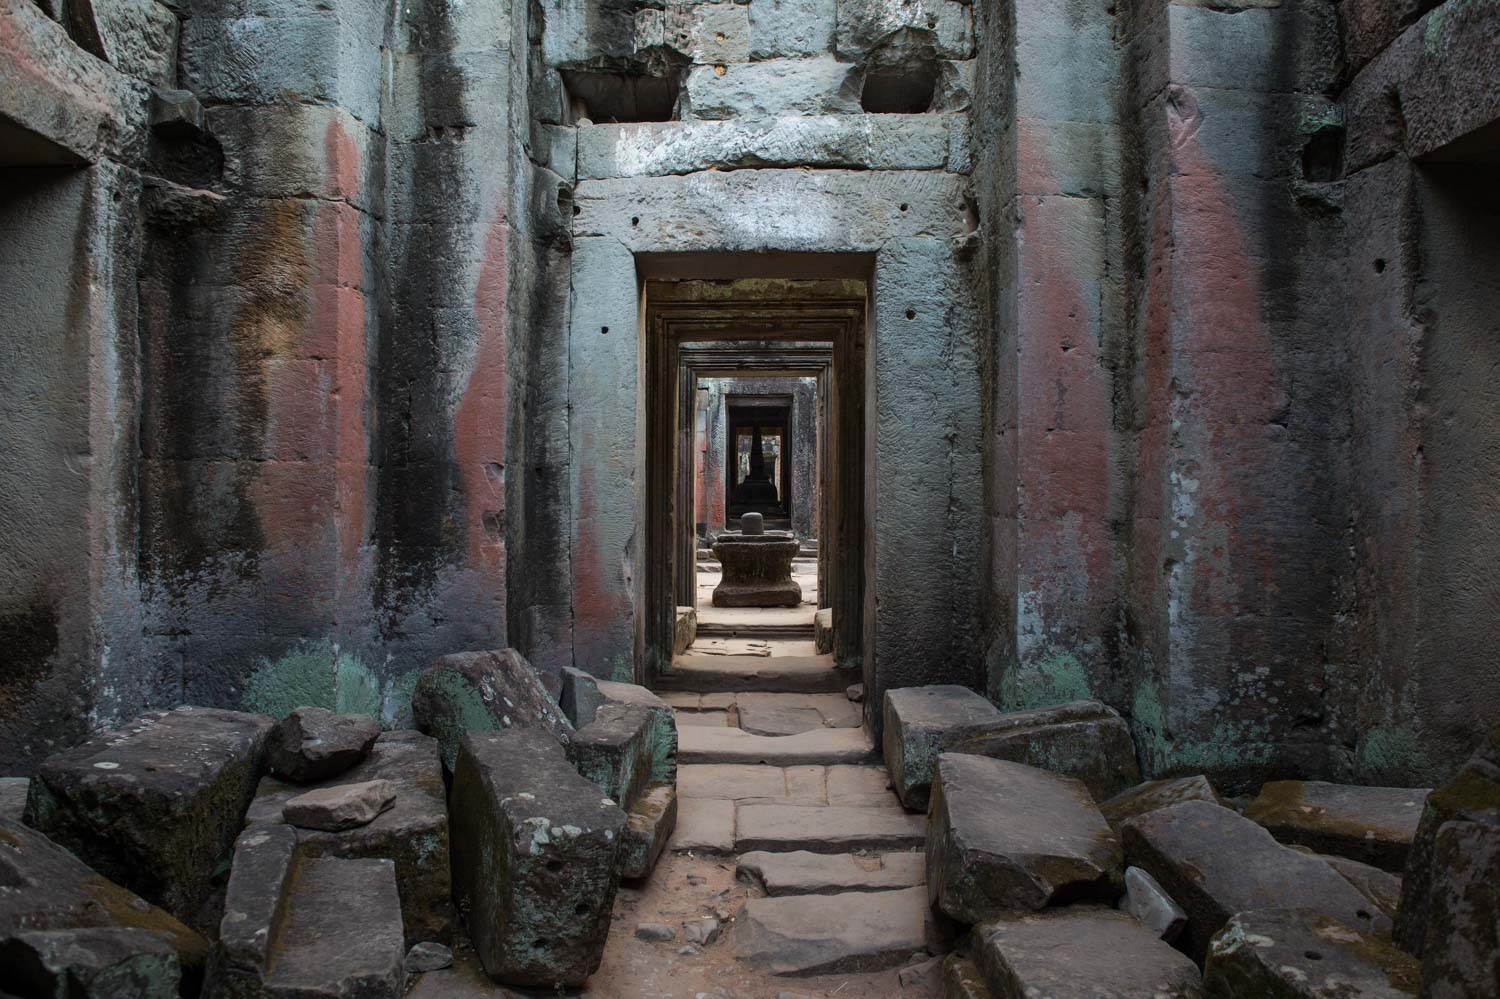 Inside Preah Khan Temple;&nbsp;Nikon D4S, 24mm, f/5.6, 1/50s, ISO 400